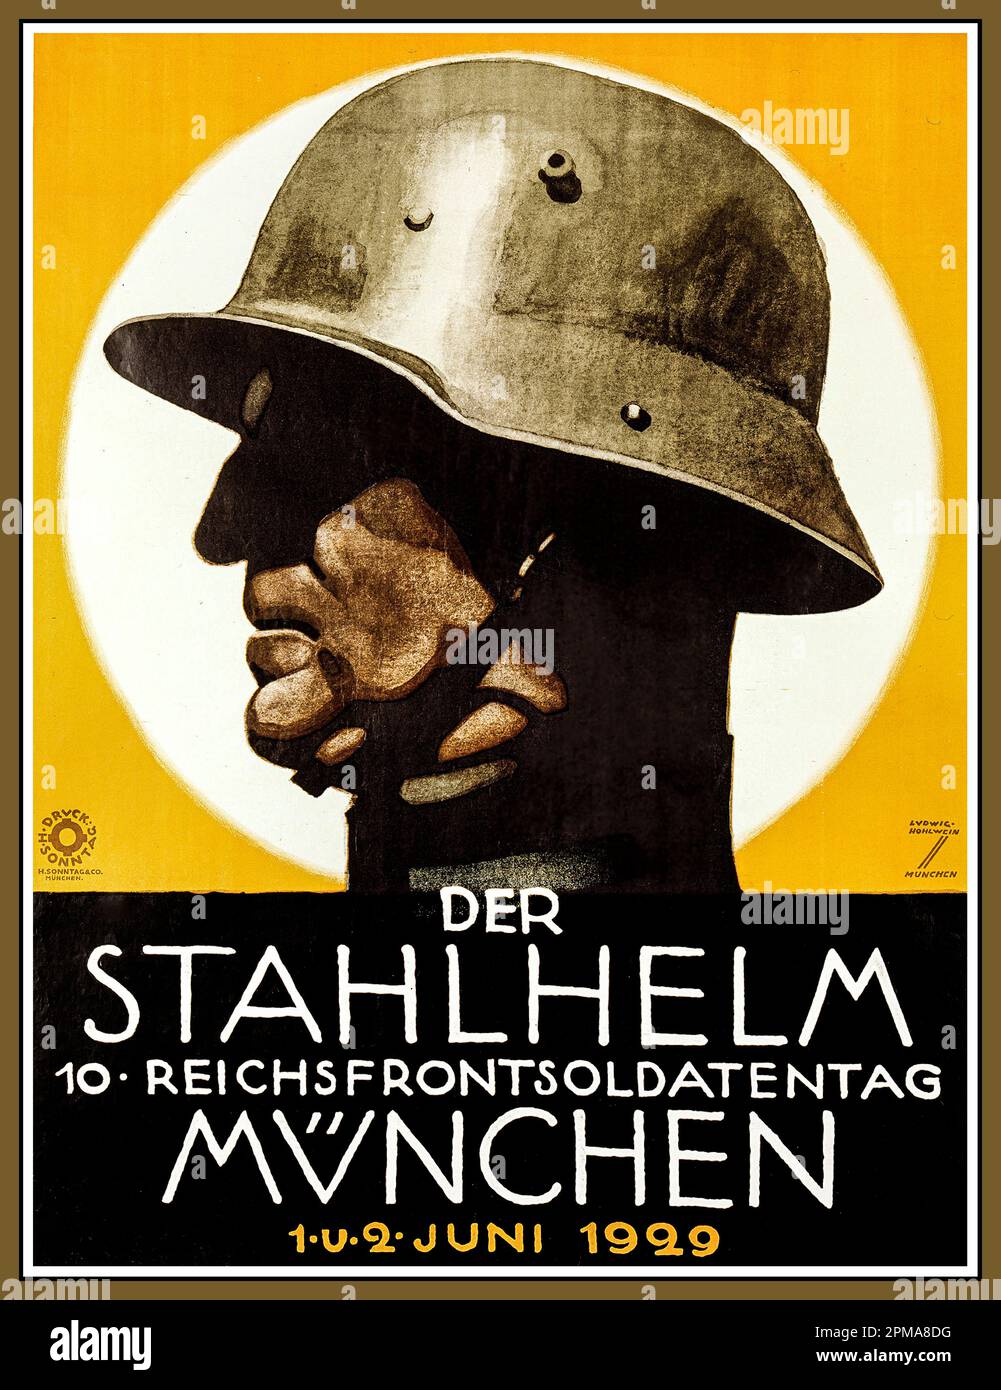 German Weimar propaganda poster 1929 'THE STEEL HELMET' Reich Front Soldiers Day. Munich June 1929 Weimar Republic Germany. Stock Photo